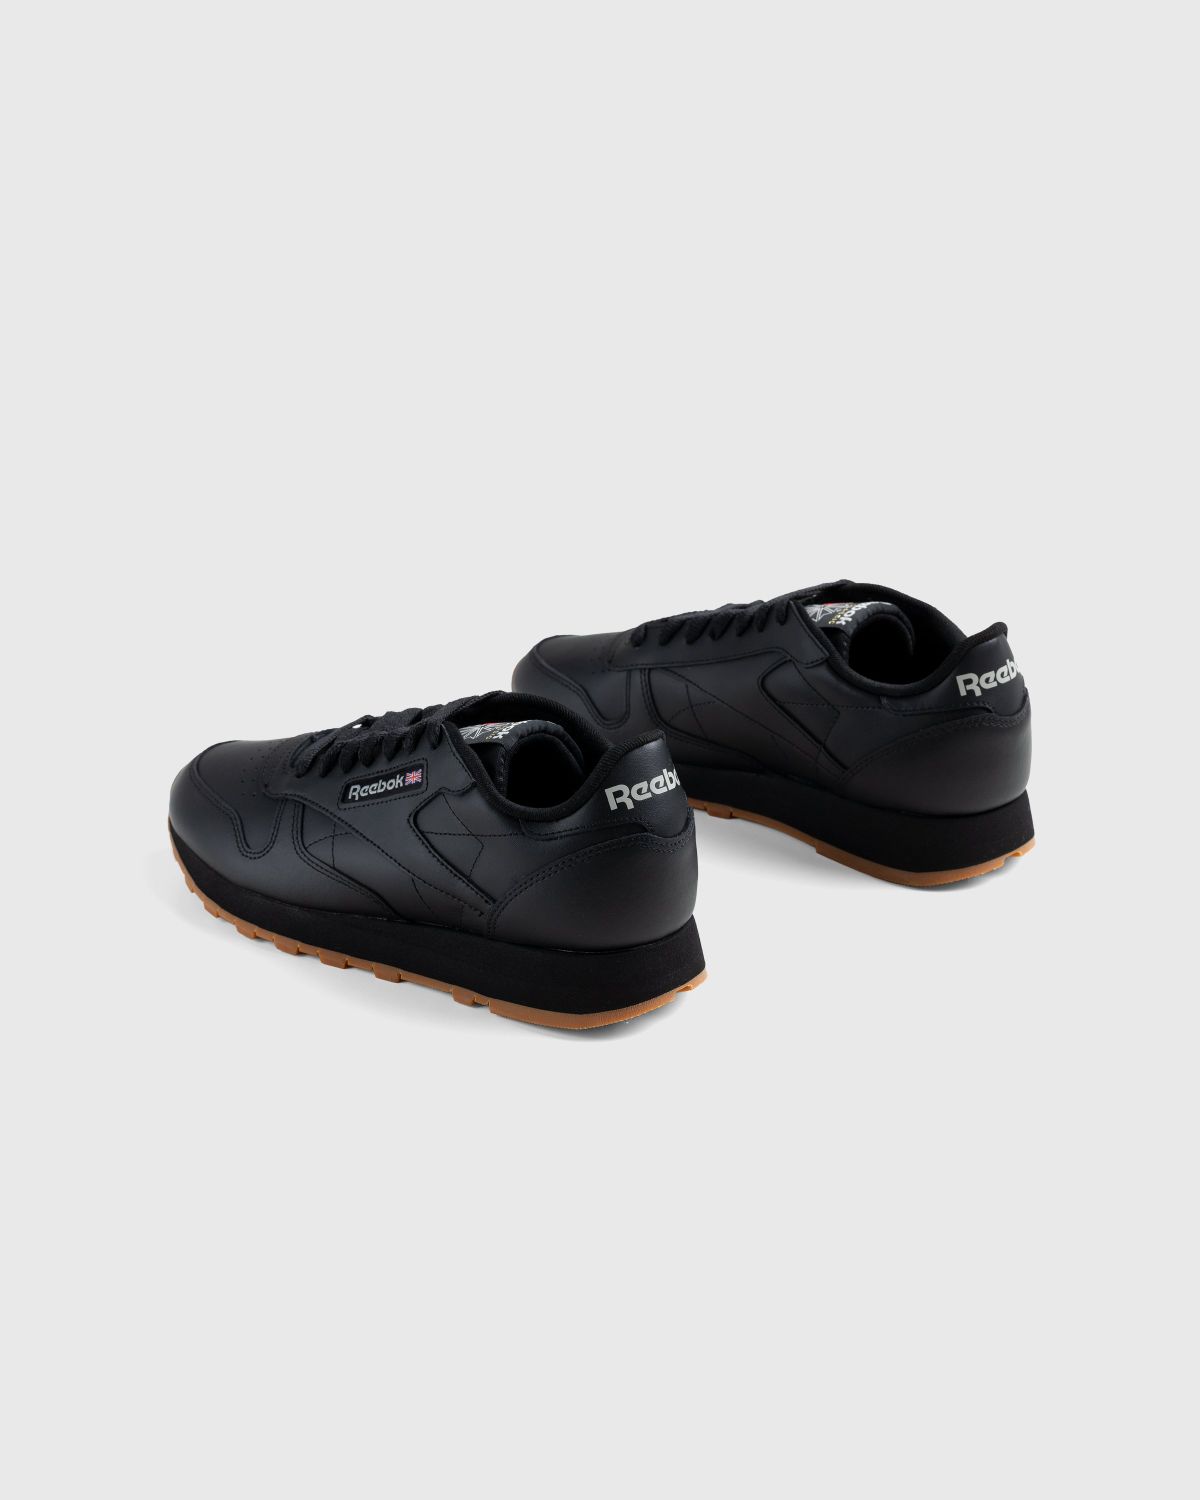 Reebok – Classic Leather Black - Low Top Sneakers - Black - Image 5